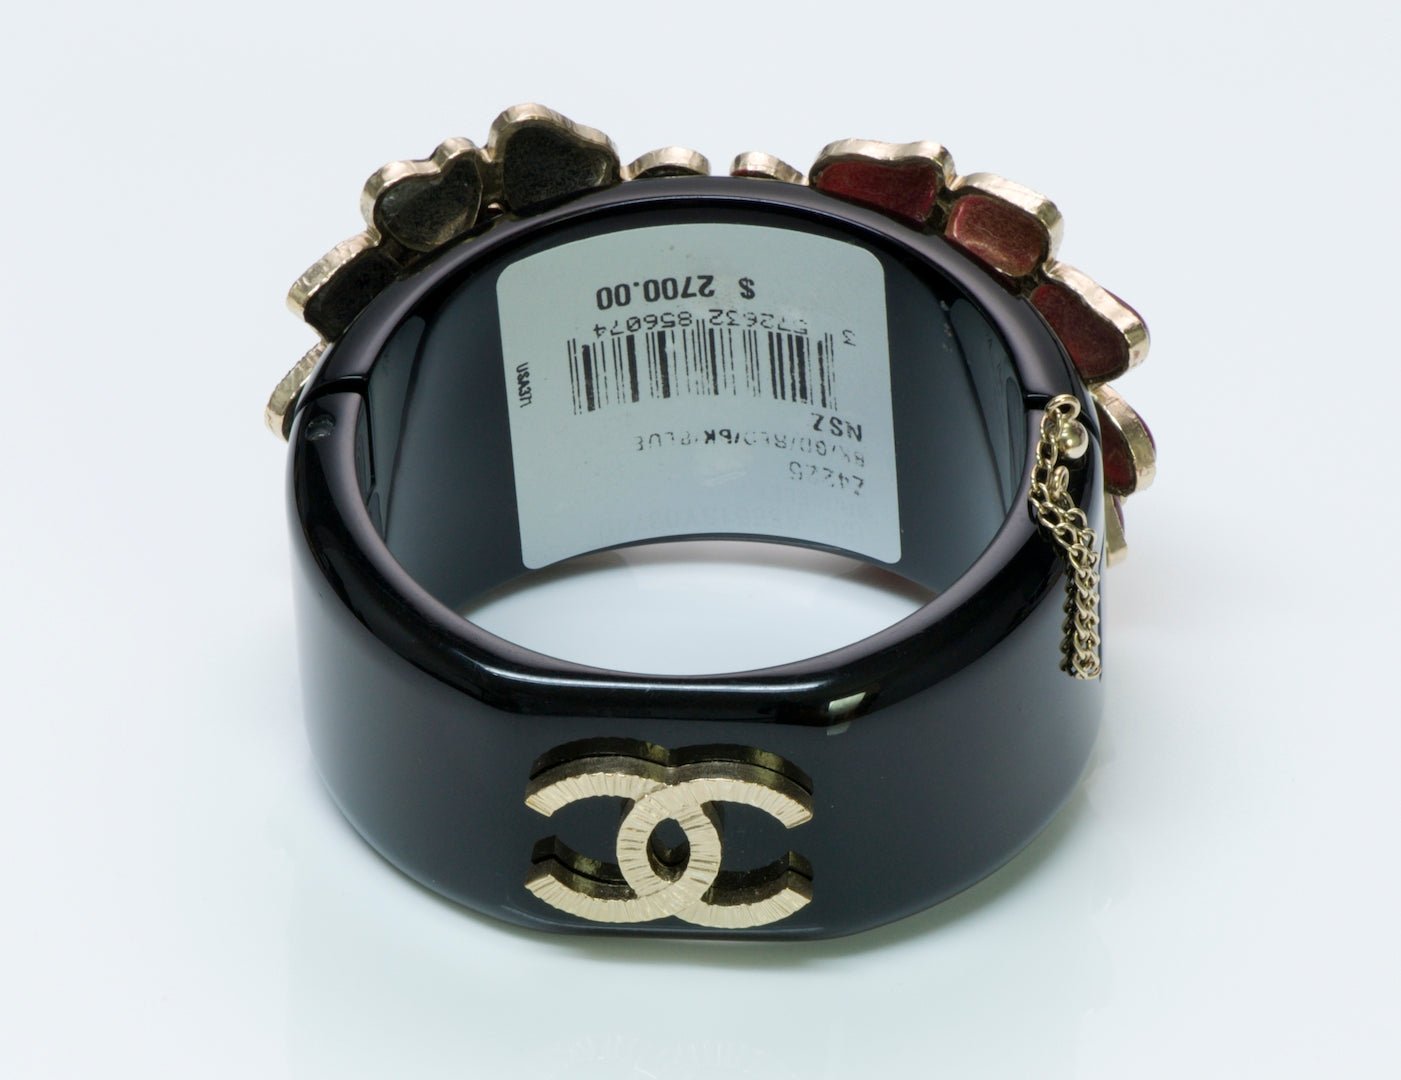 Chanel Gripoix Flower Bangle Bracelet